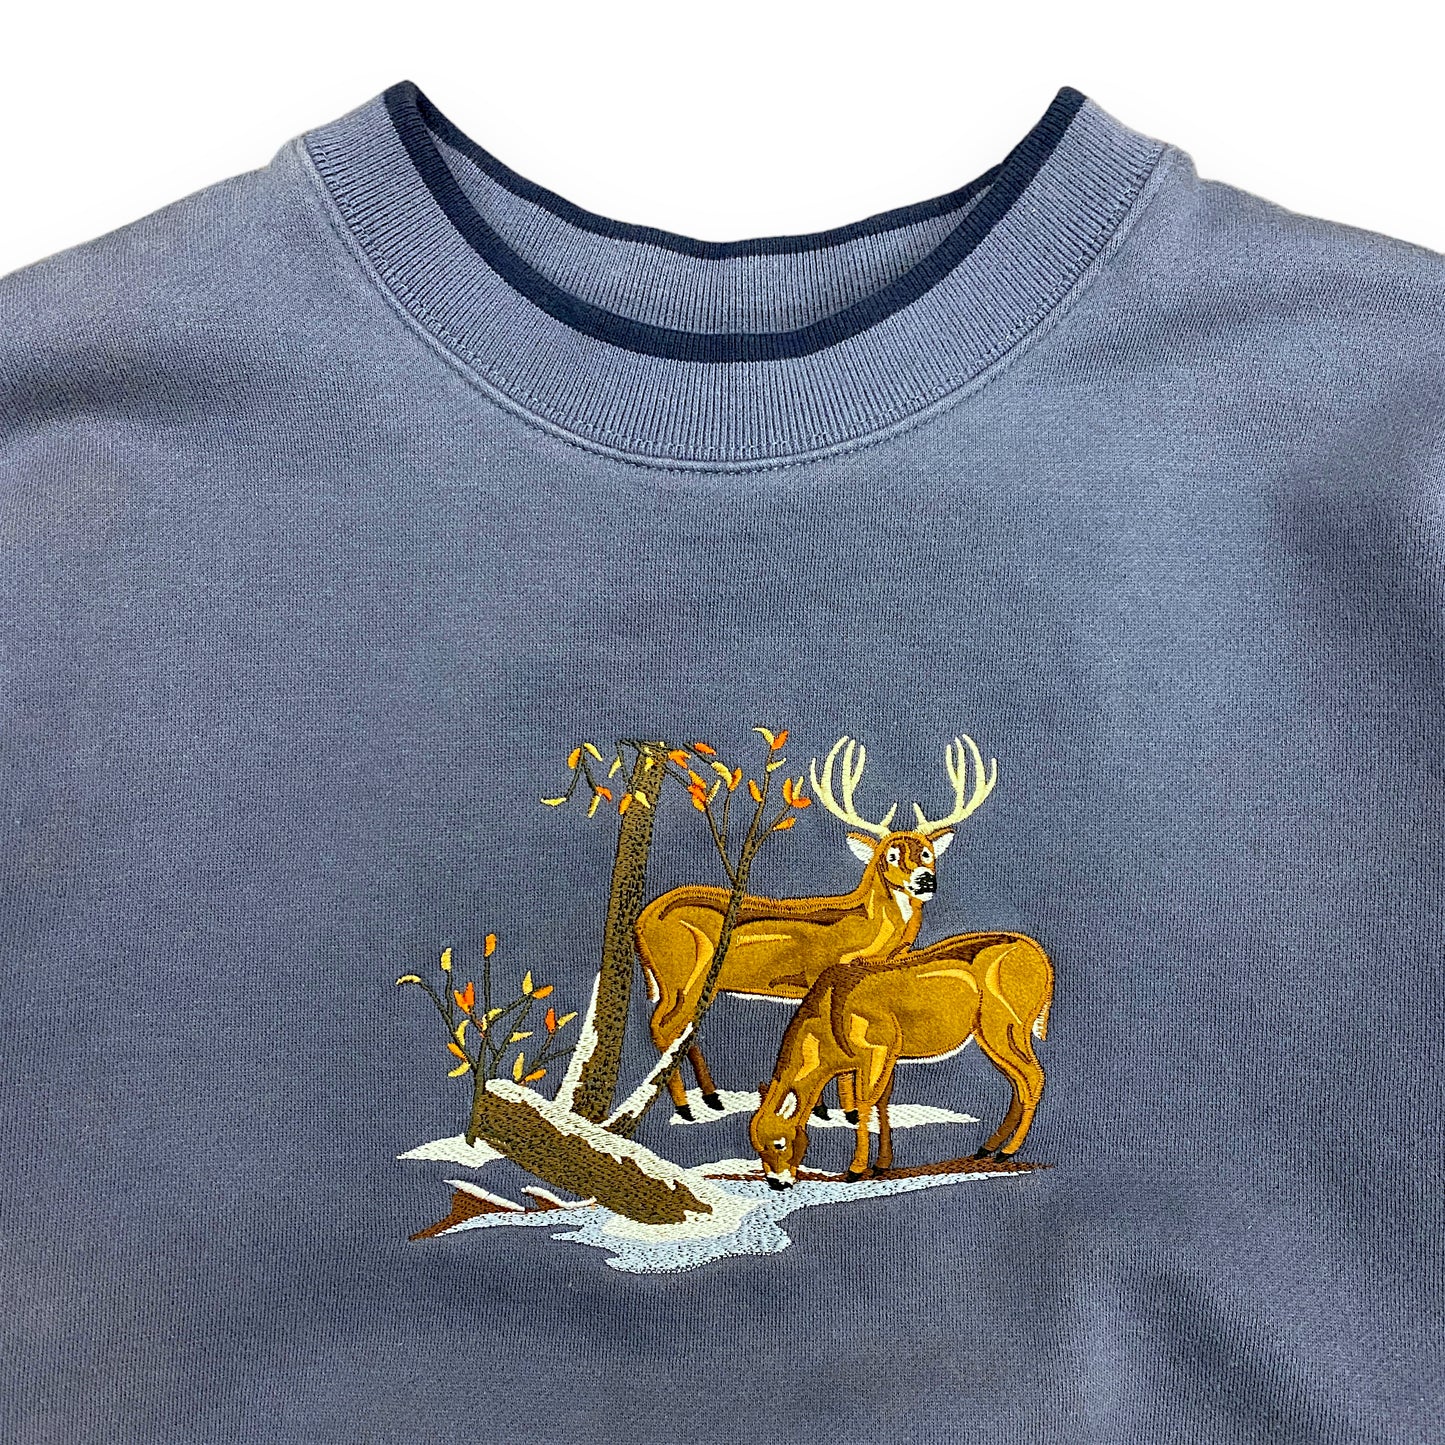 1990s Embroidered Deer Sweatshirt - Size Large